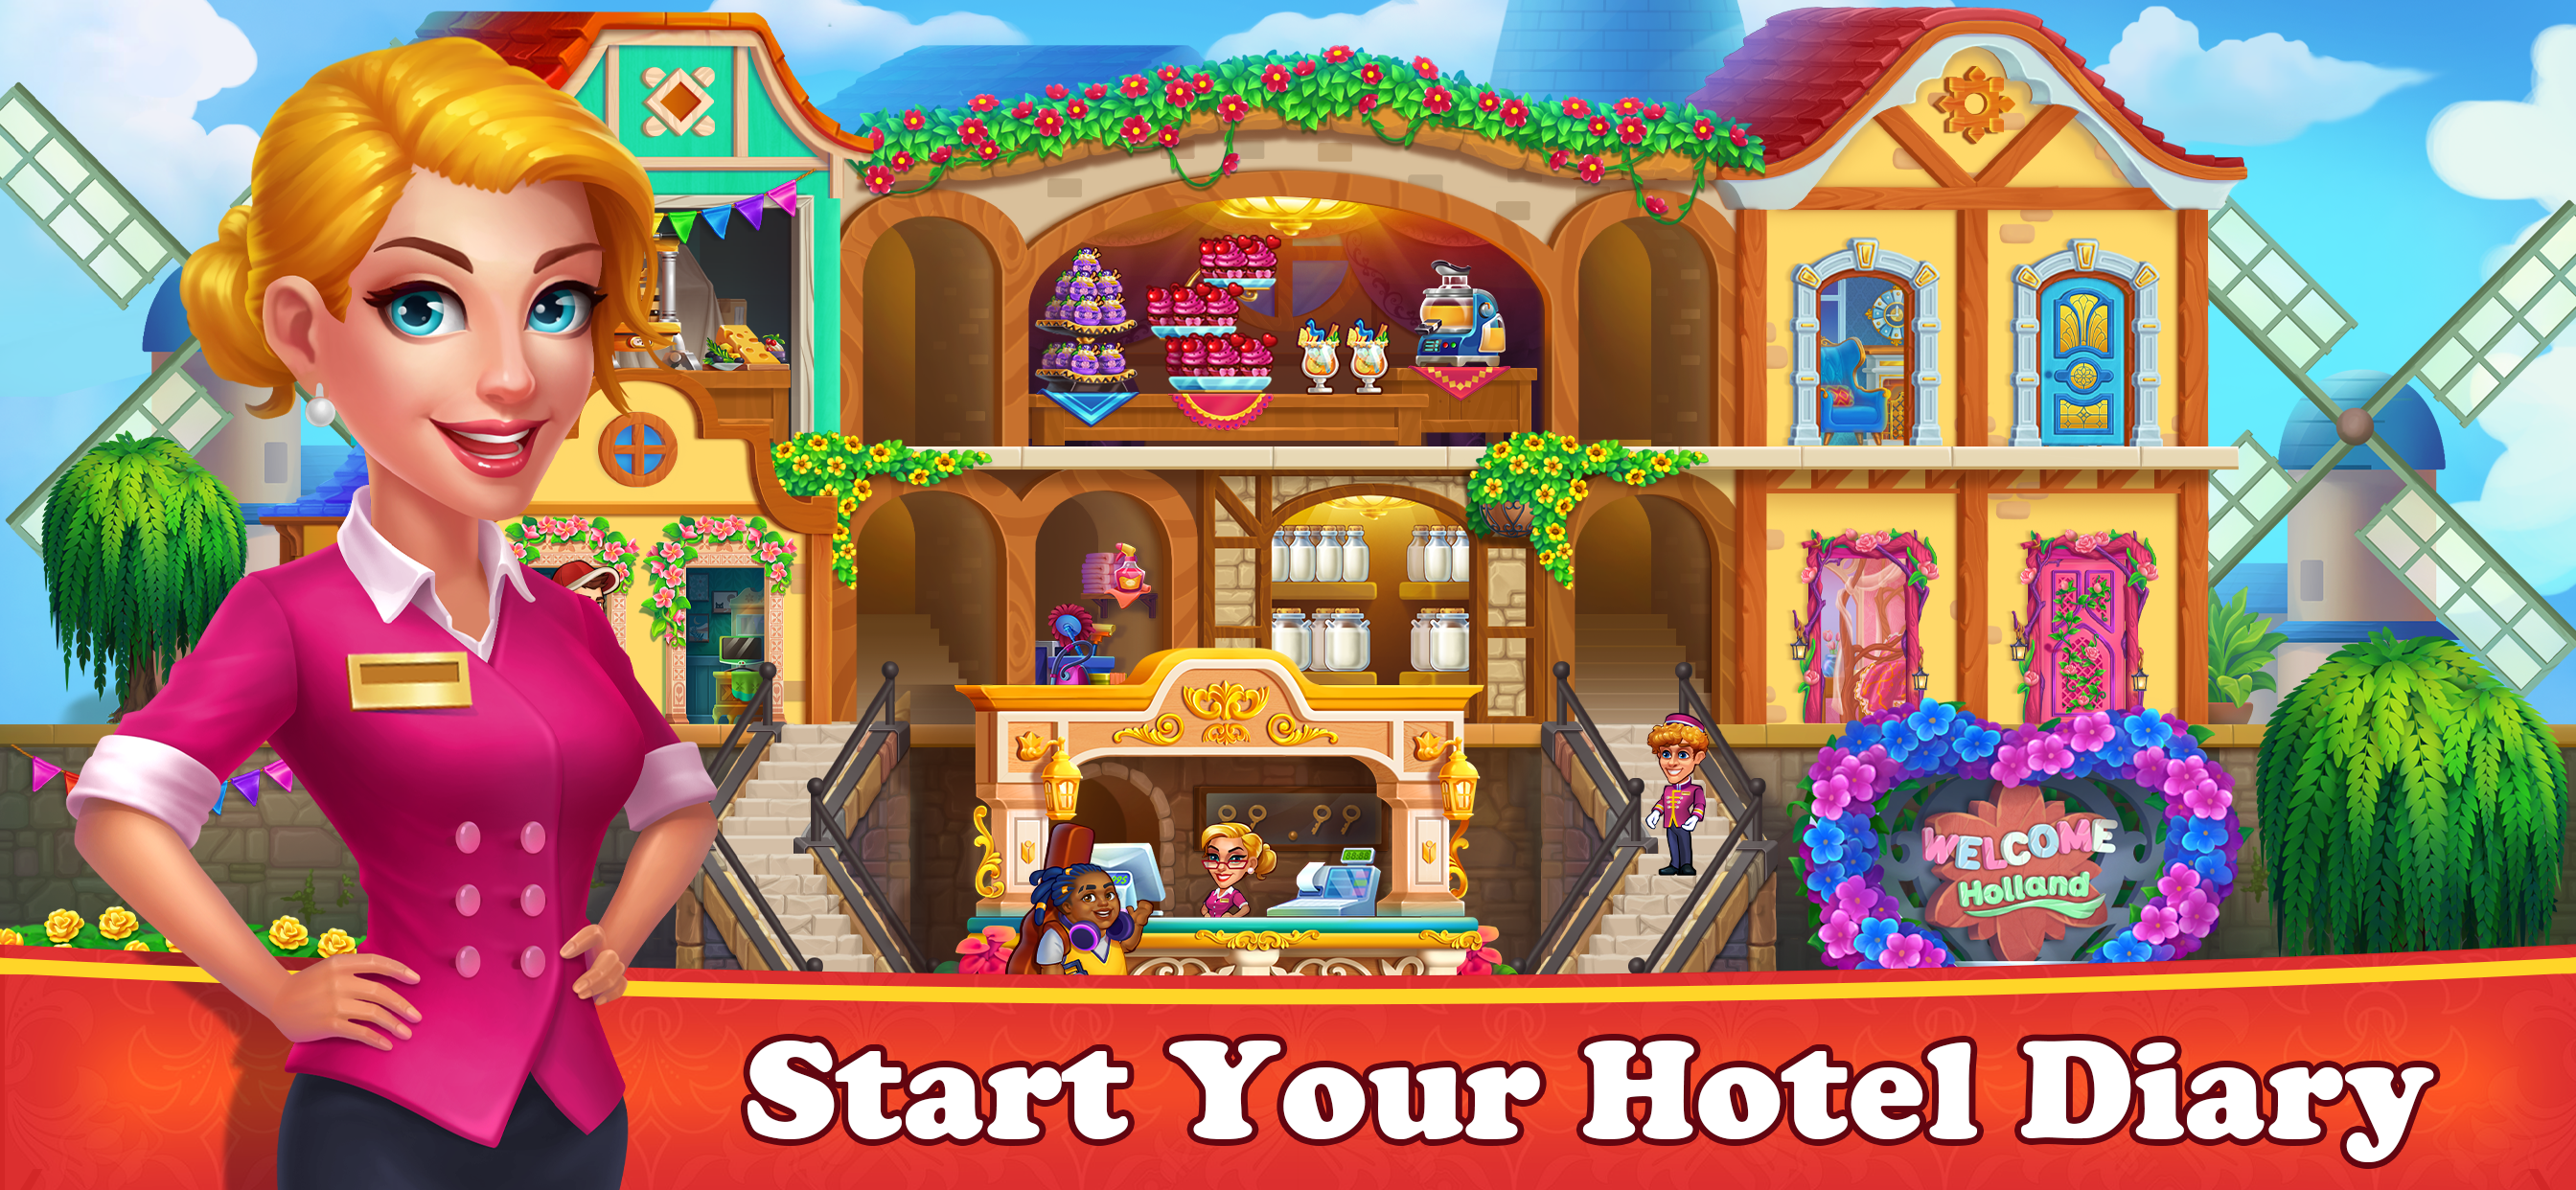 Screenshot 1 of Hotel Diary - jogo de hotel 1.4.7